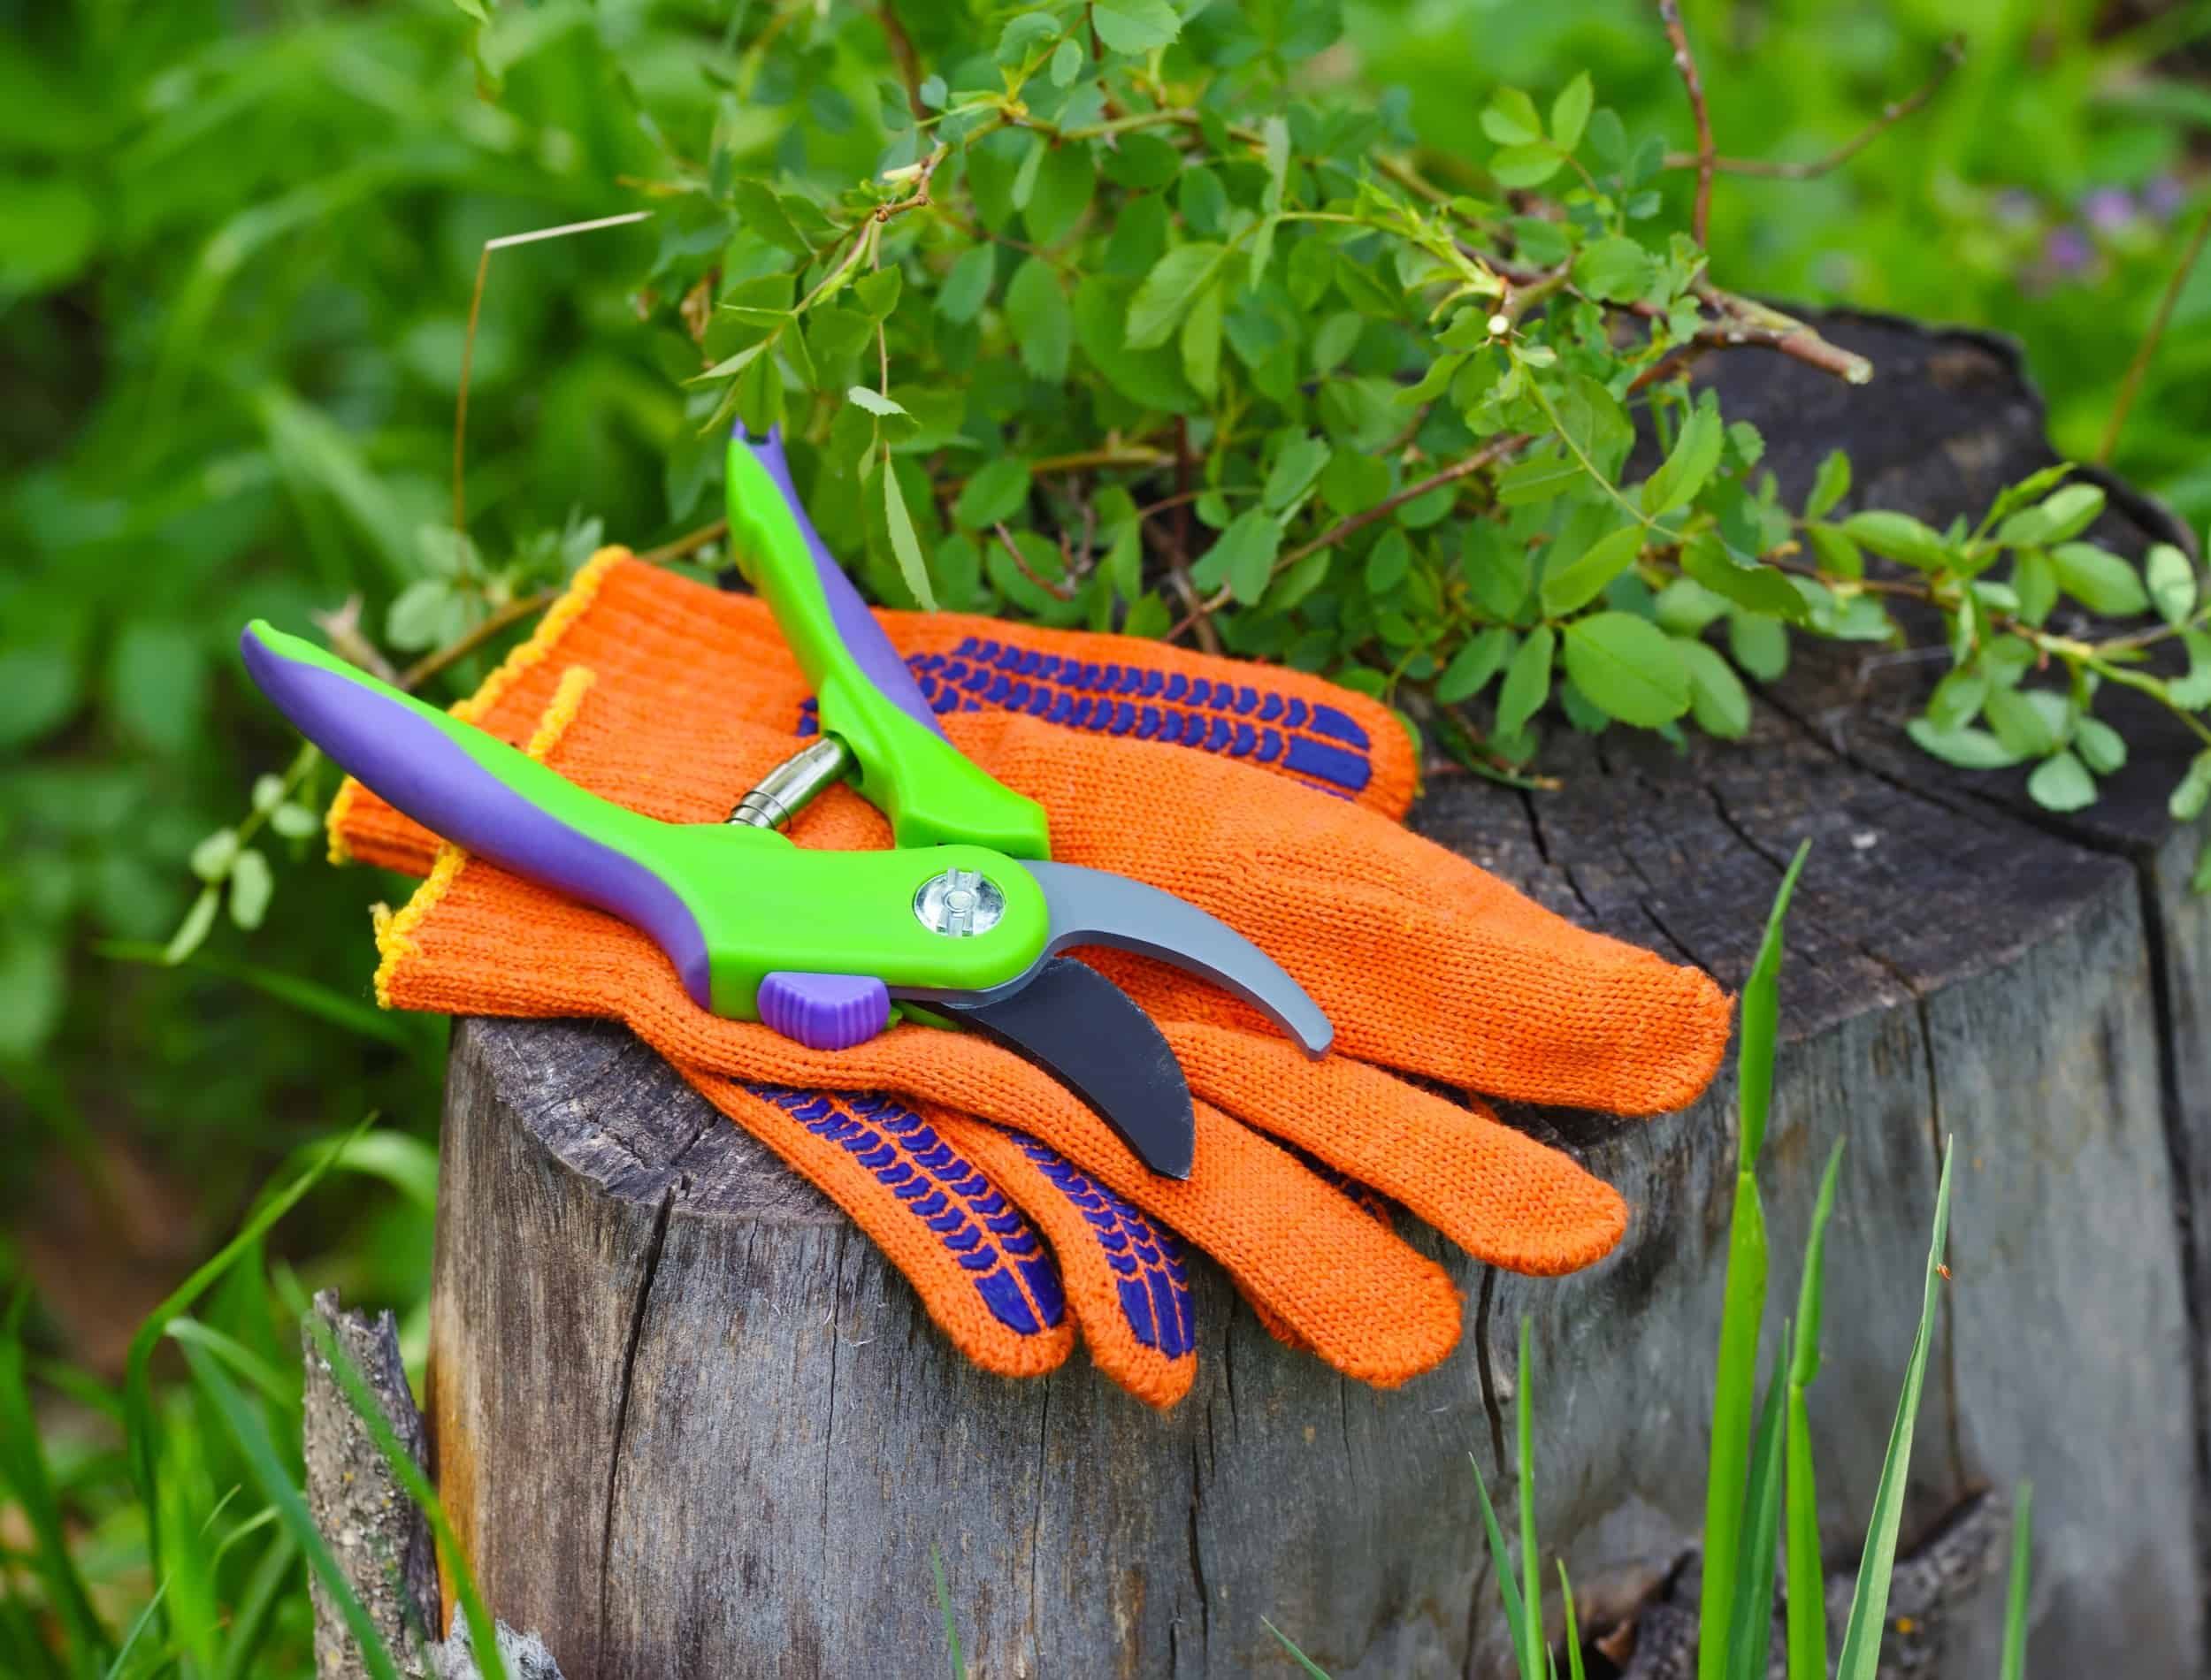 Garden gloves with a pruner for working in the garden